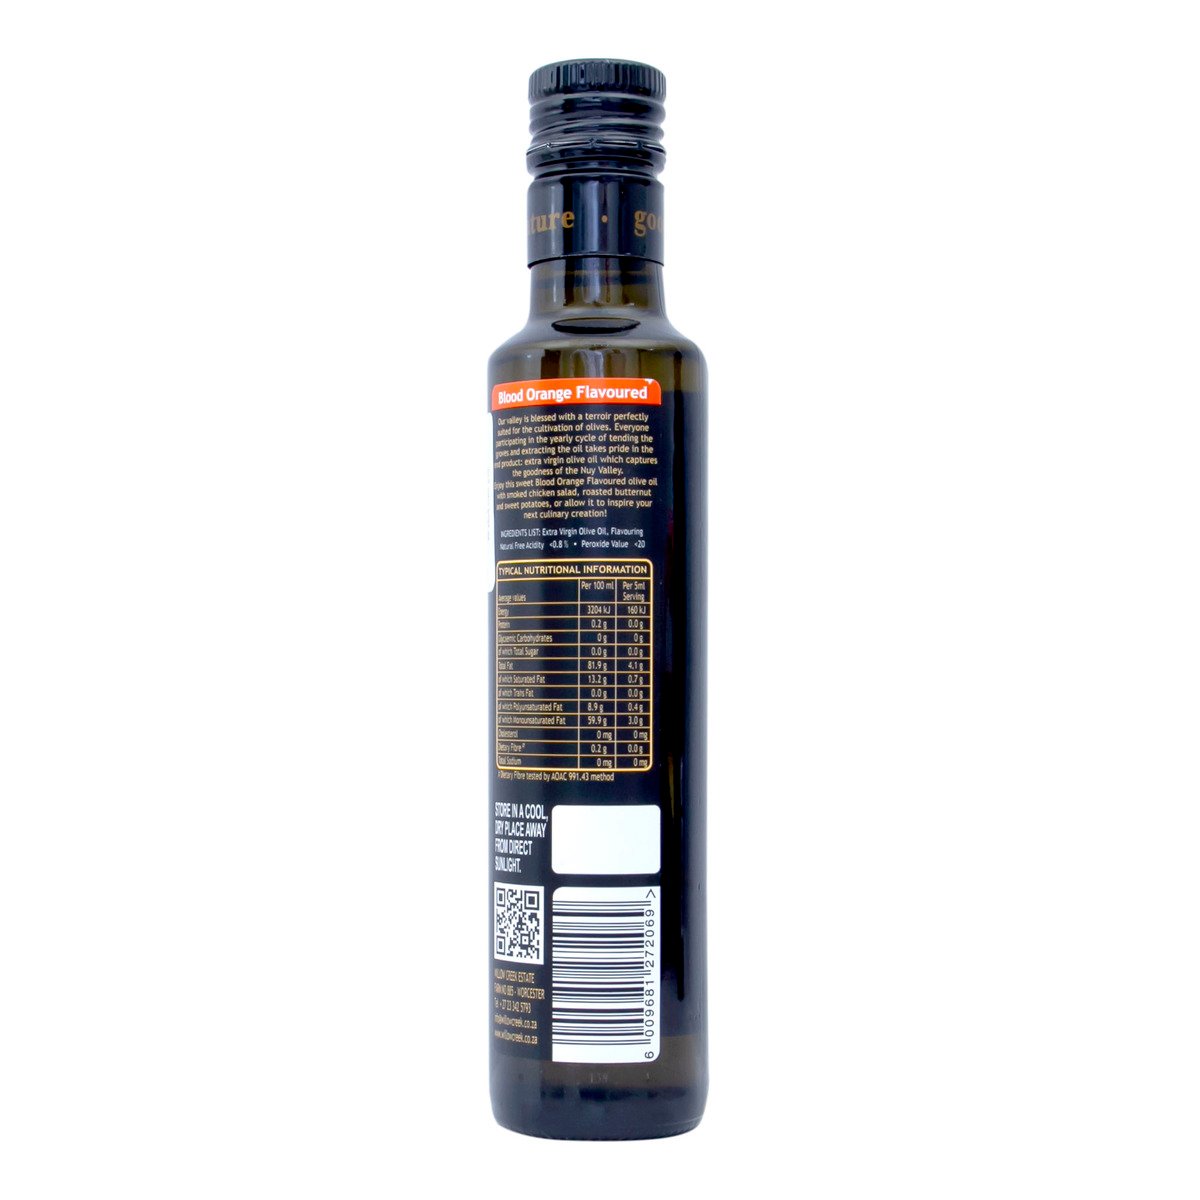 Willow Creek Blood Orange Flavoured Extra Virgin Olive Oil 250 ml